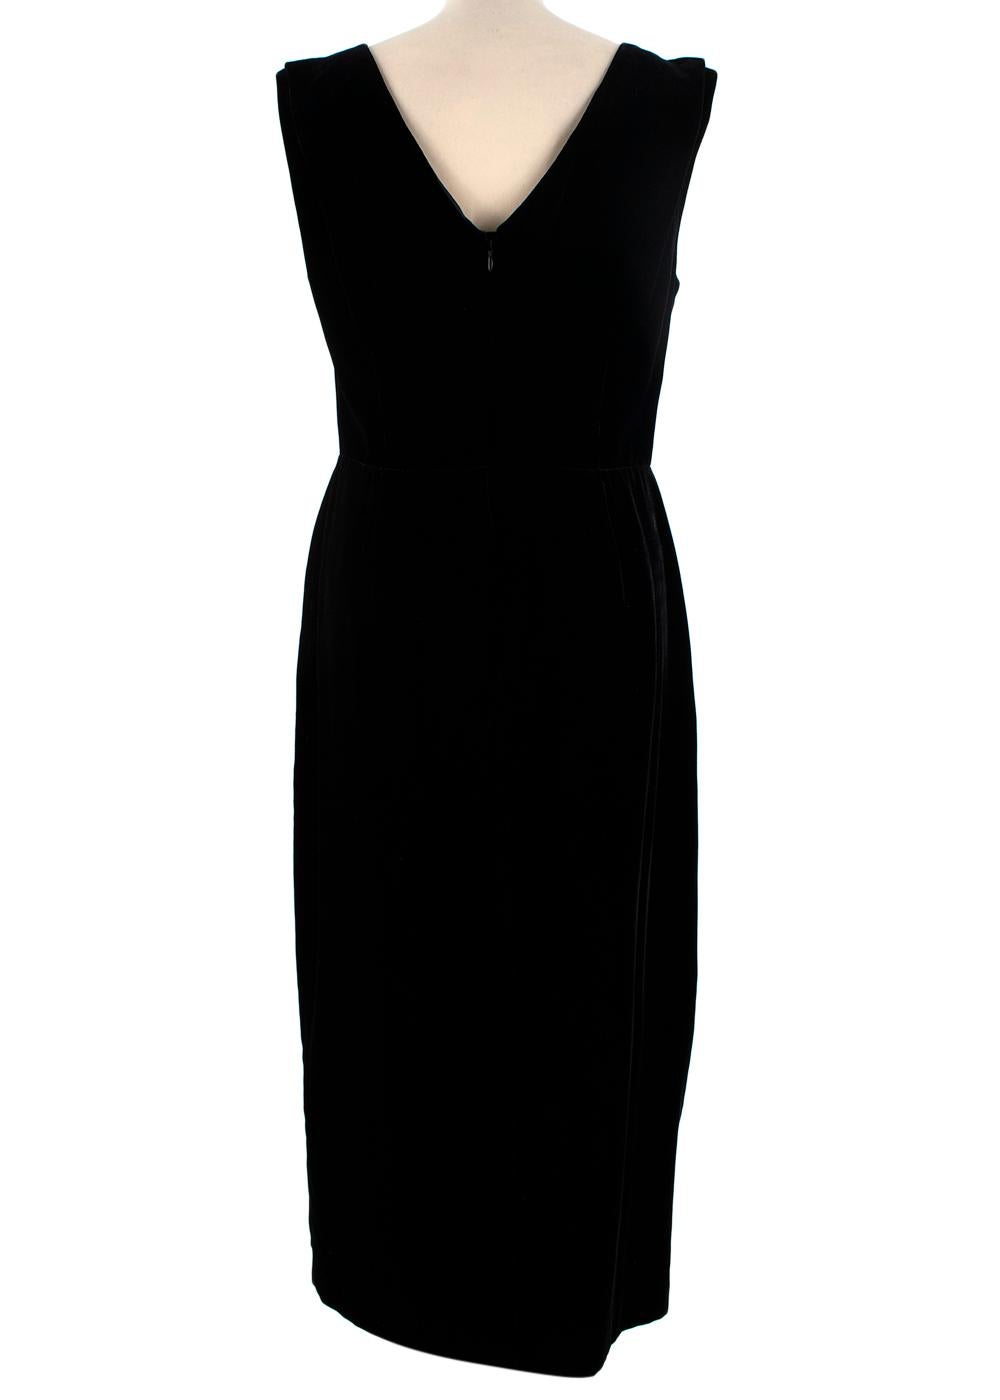 black dress with flower applique